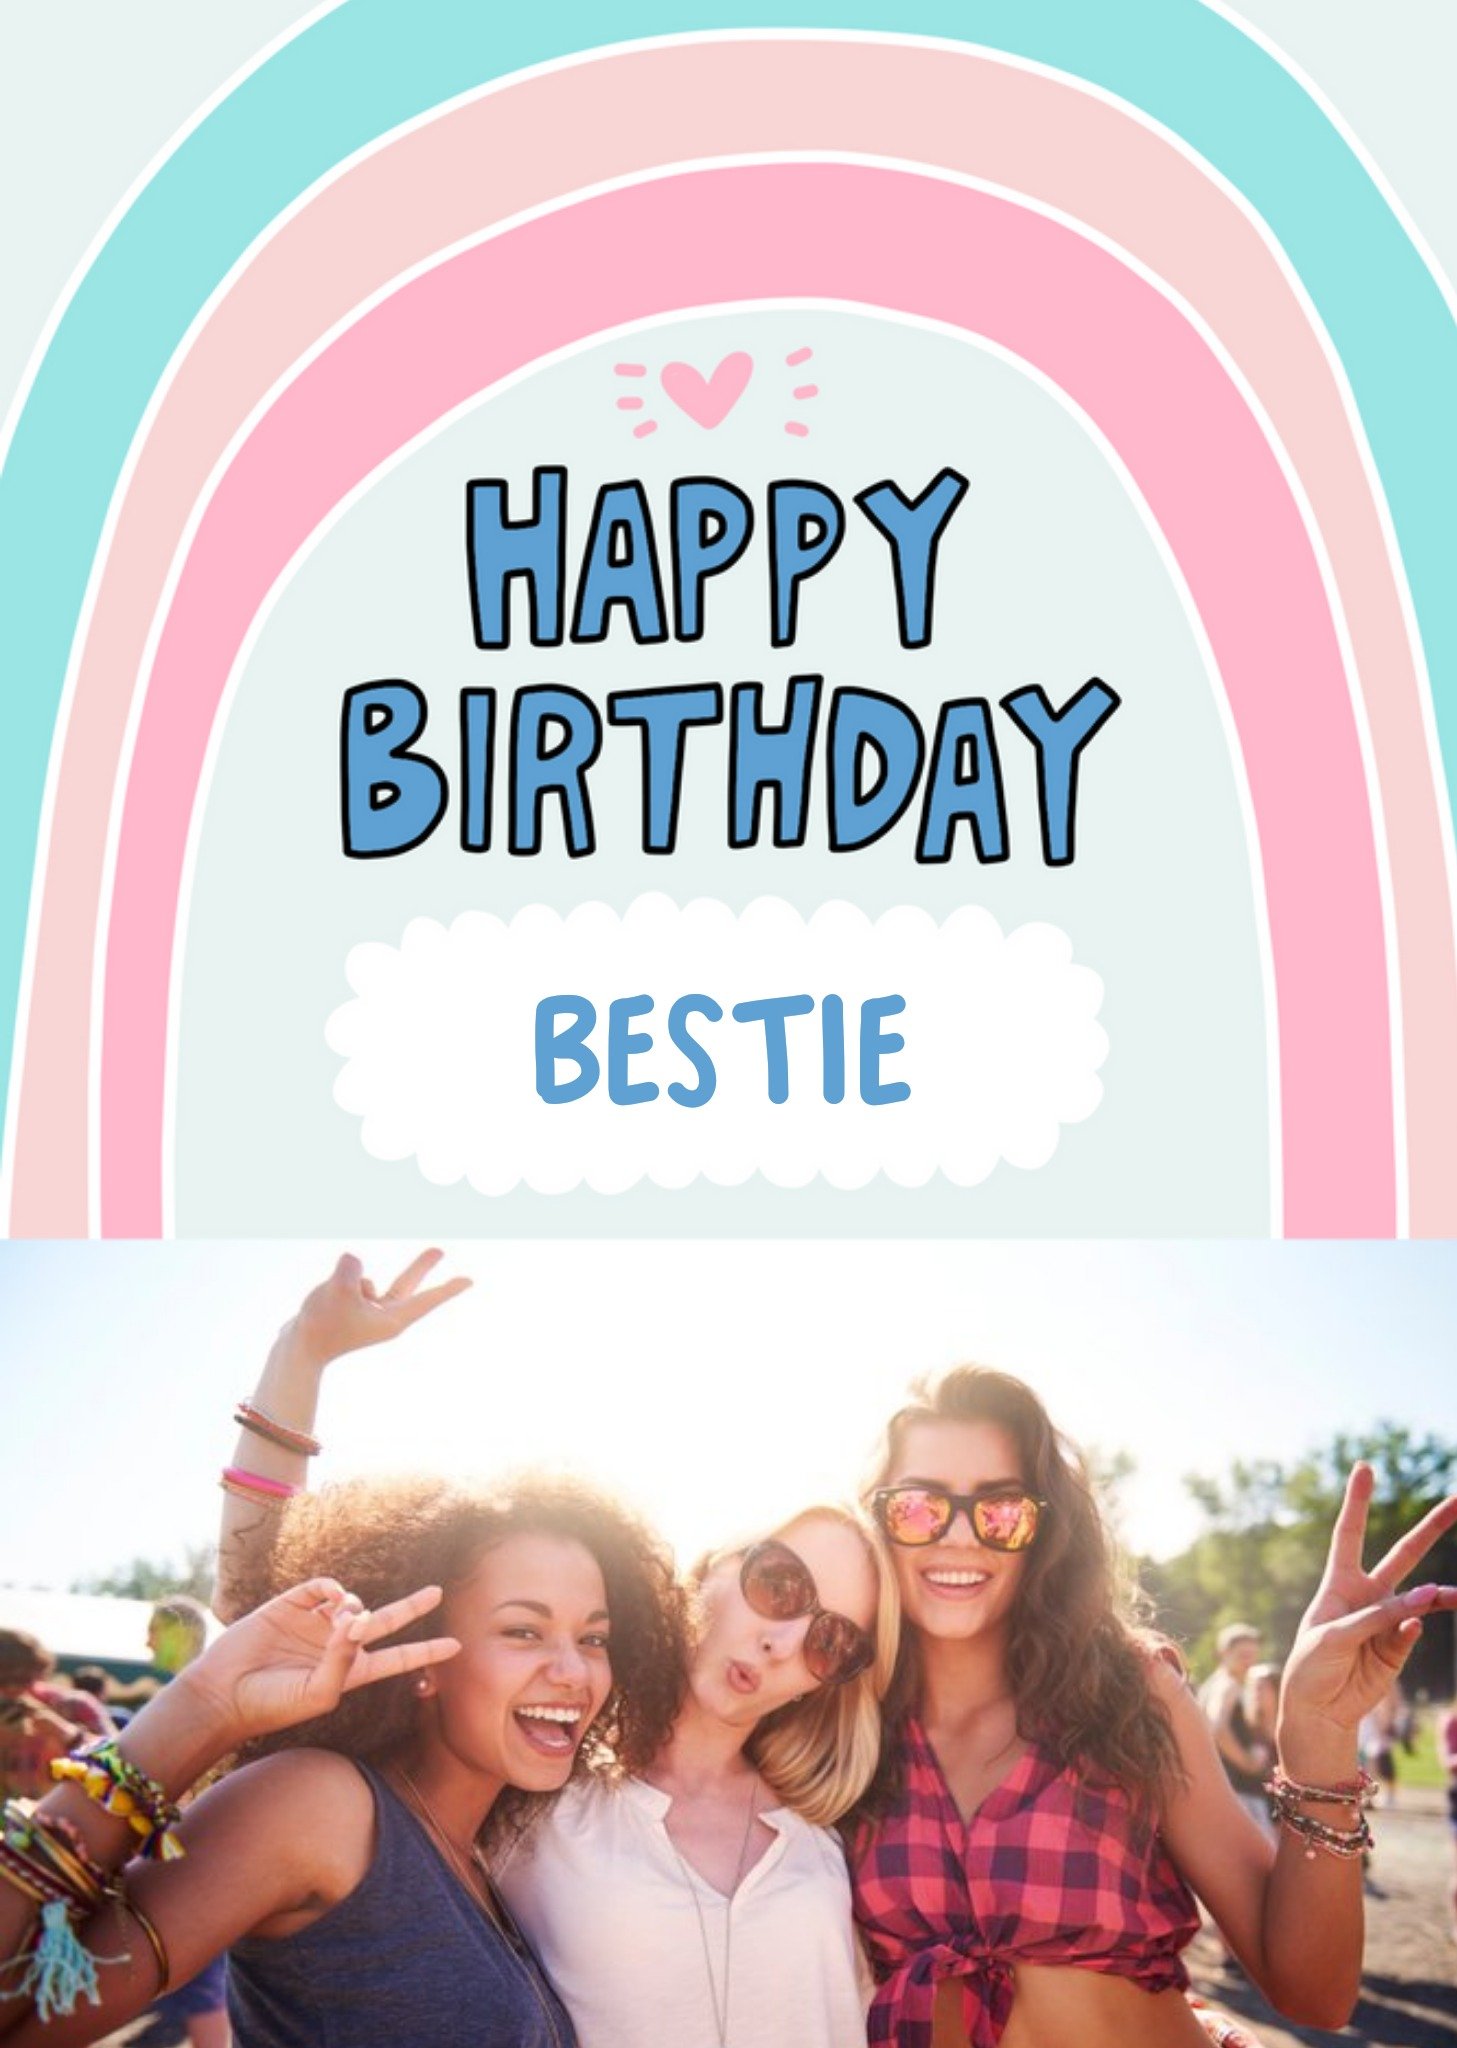 Moonpig Rainbow Illustration Around Text Bestie Birthday Photo Upload Card, Large